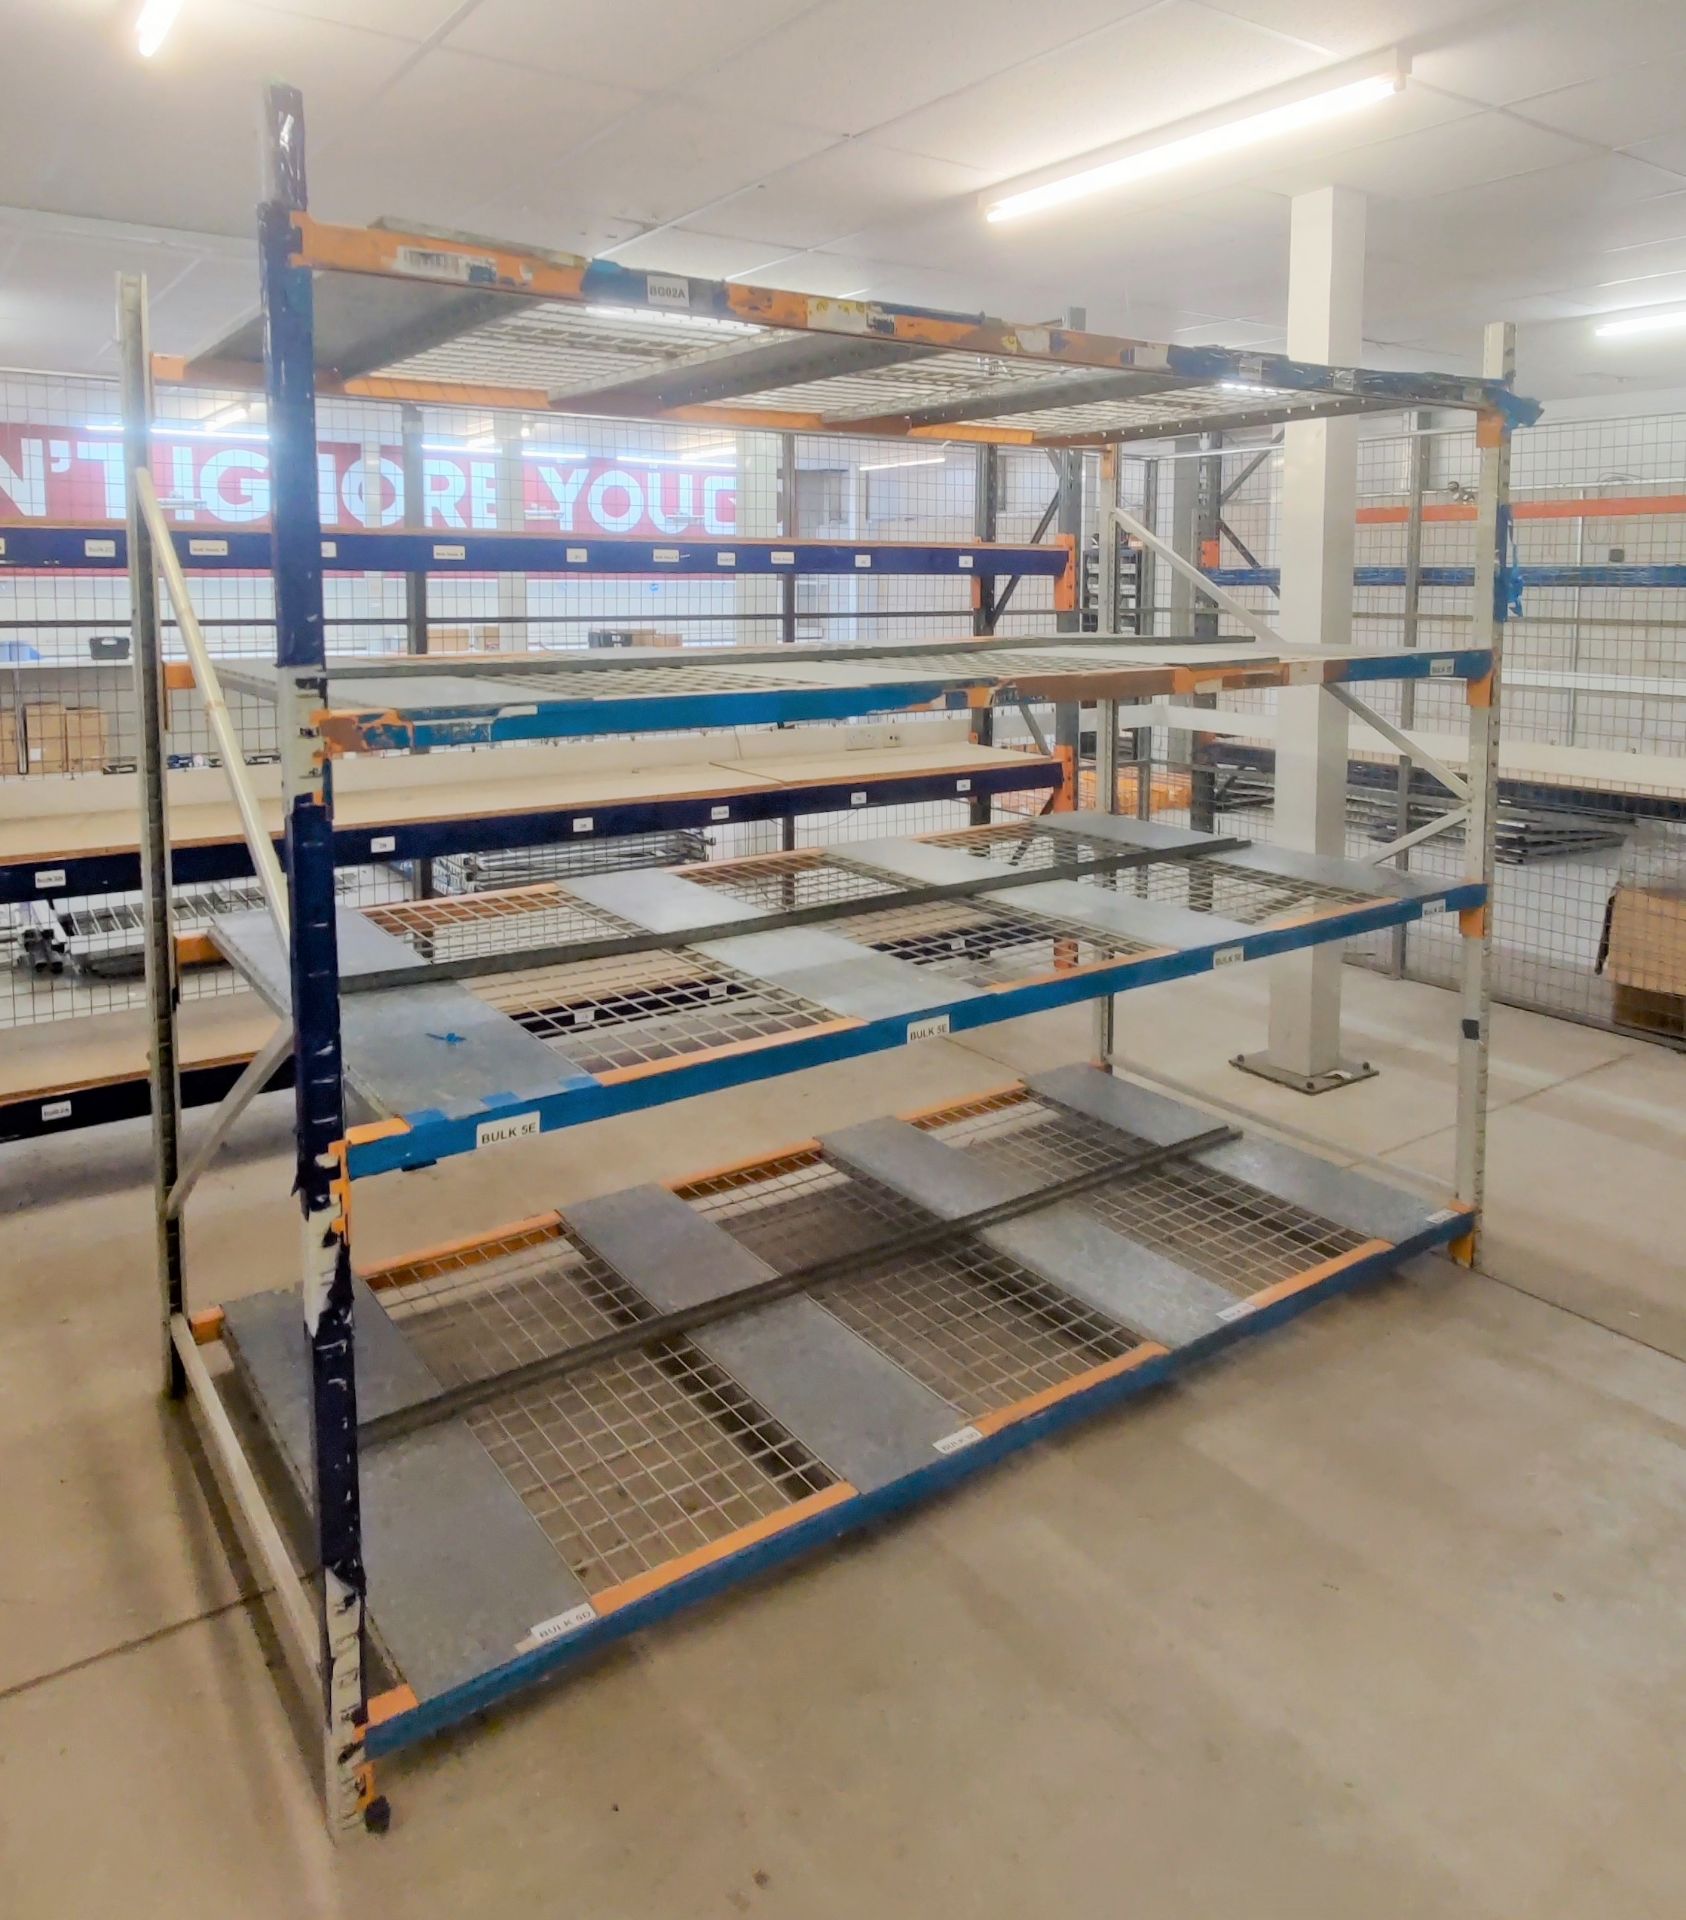 5 x Bays of Heavy Duty Warehouse Racking / Shelving With Metal Shelf Panels